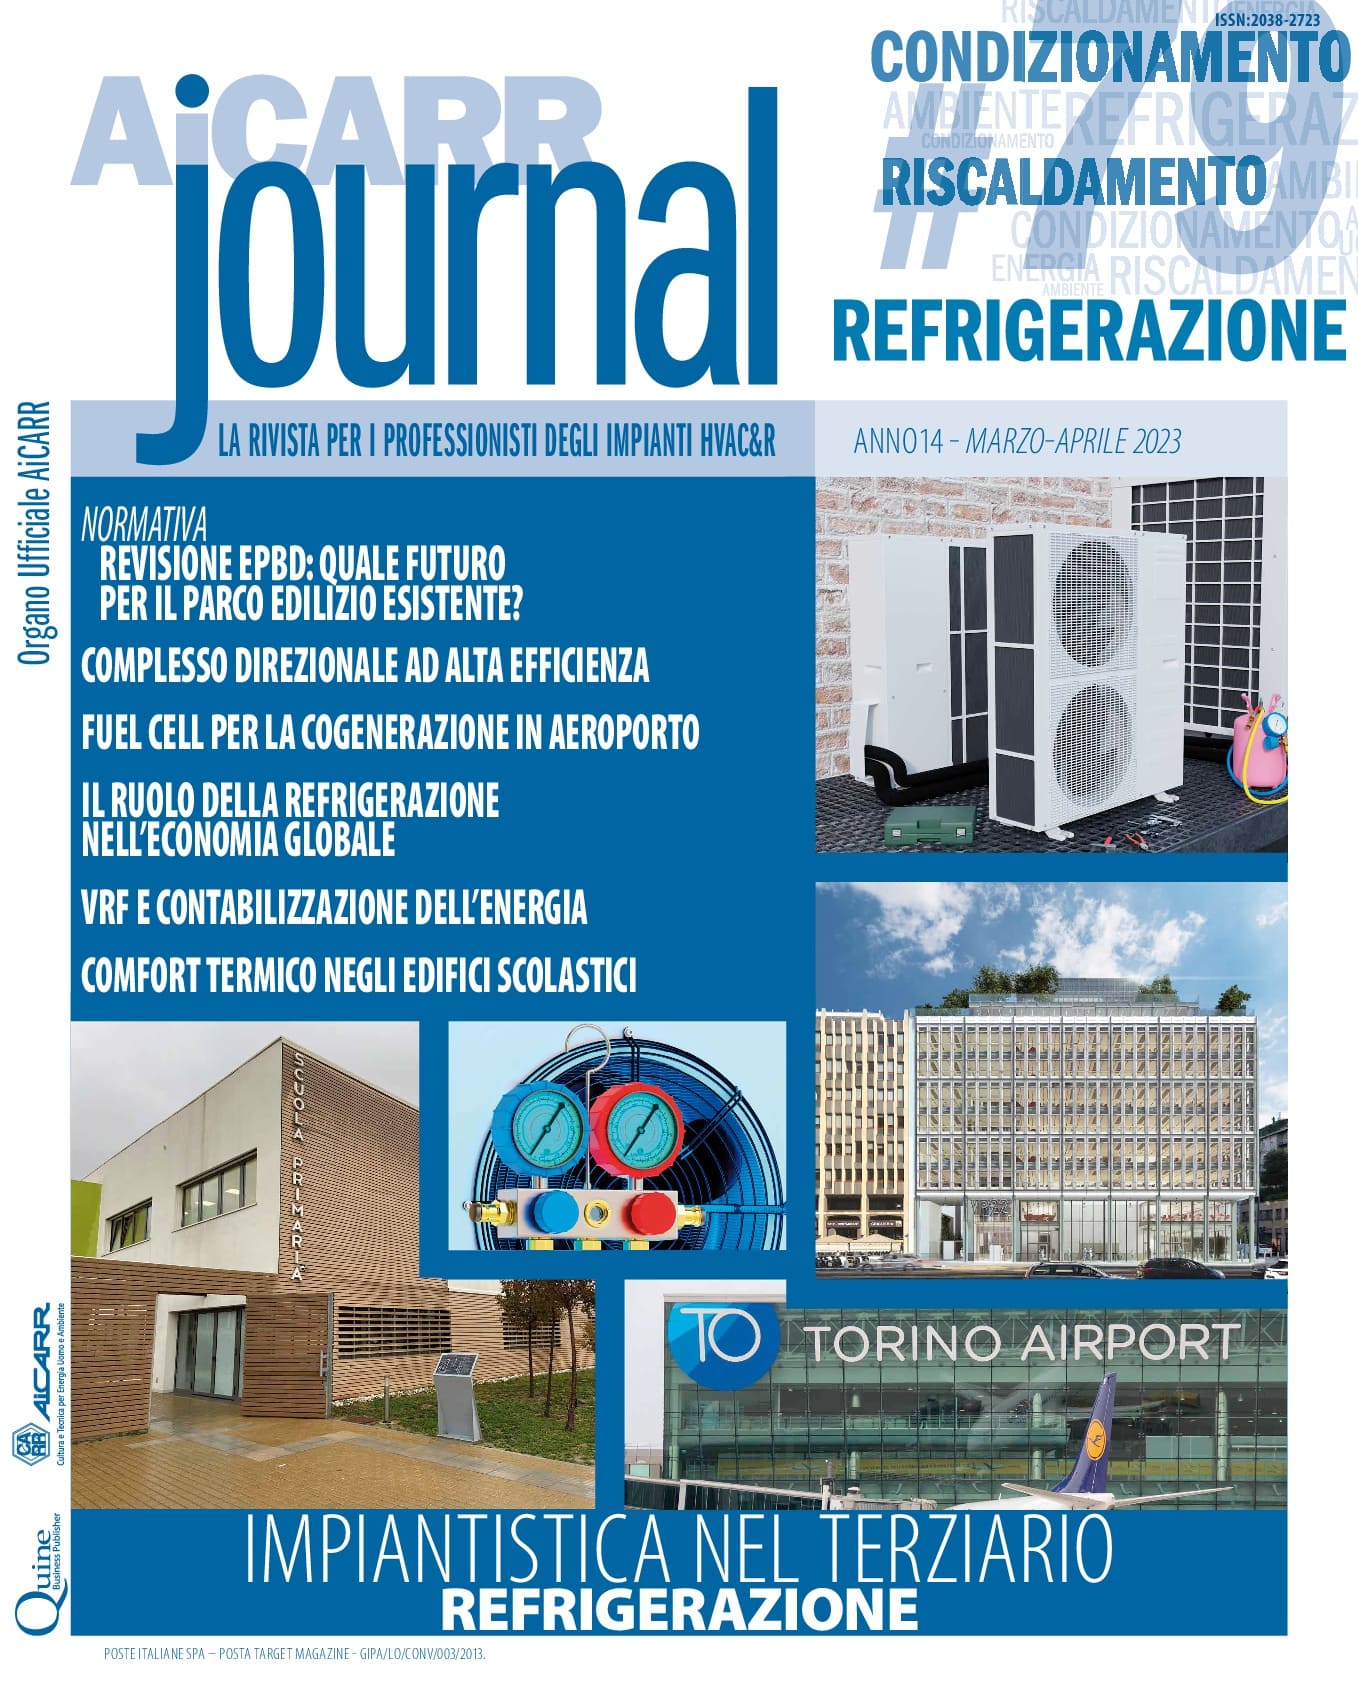 AiCARR Journal #35 - Efficienza energetica nelle strutture per il